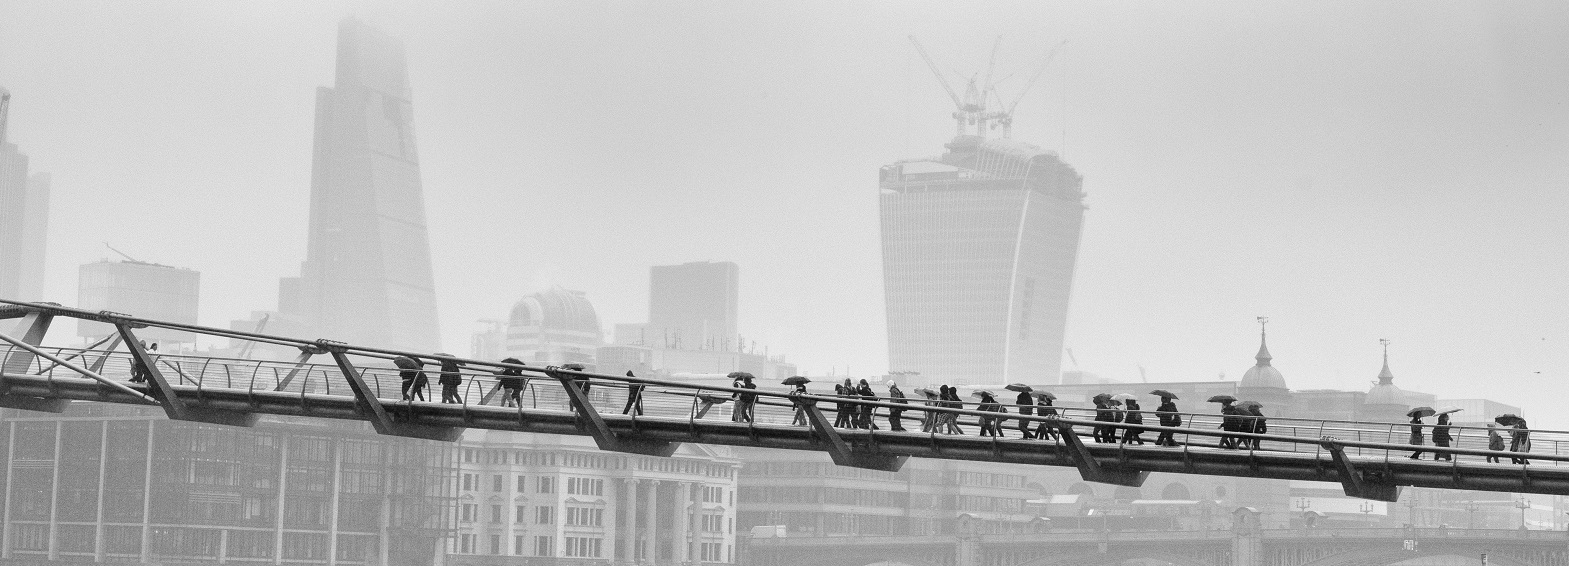 Black and white image of the Millennium Bridge in London